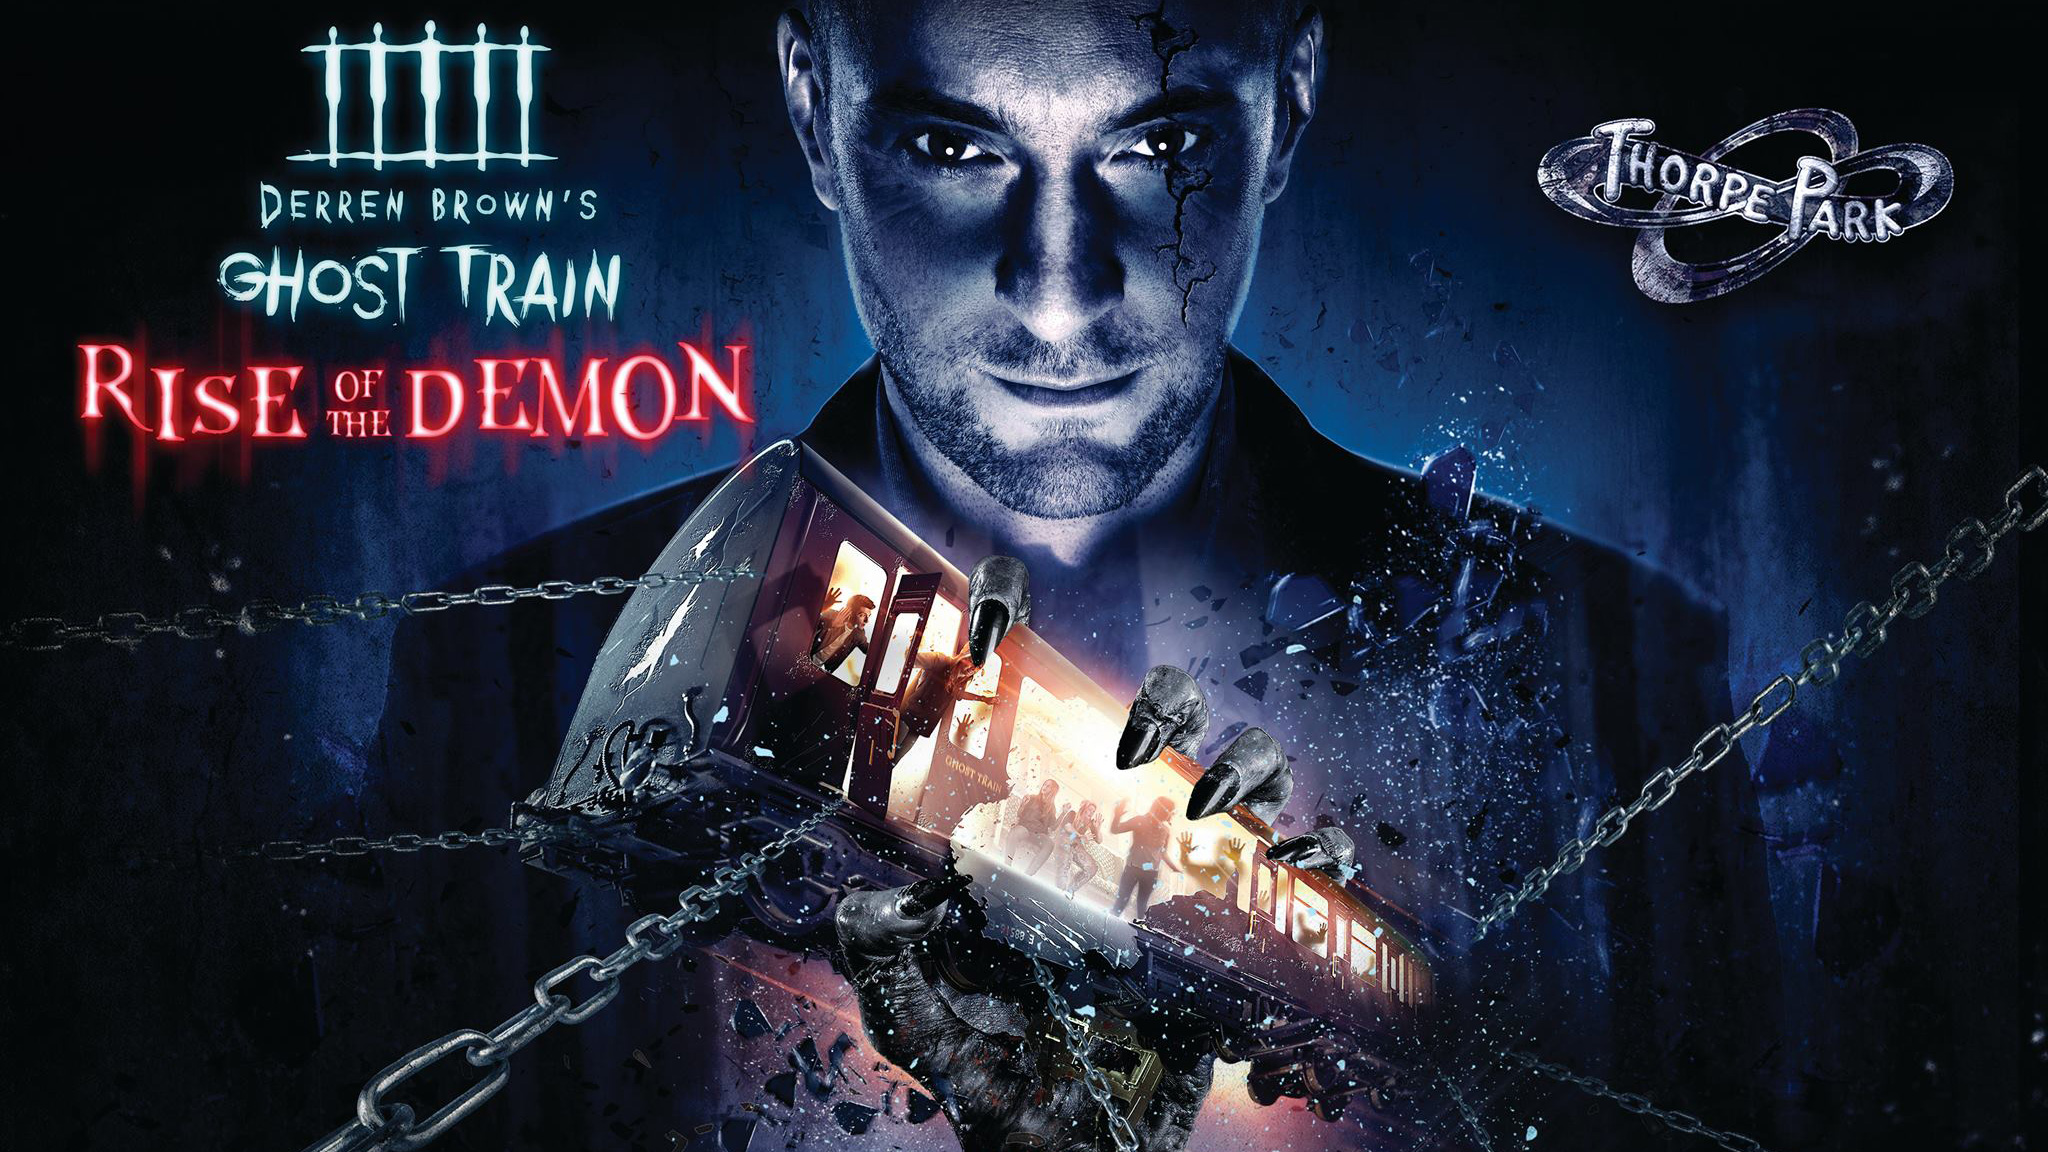 Derren Brown's Ghost Train Rise of the Demon